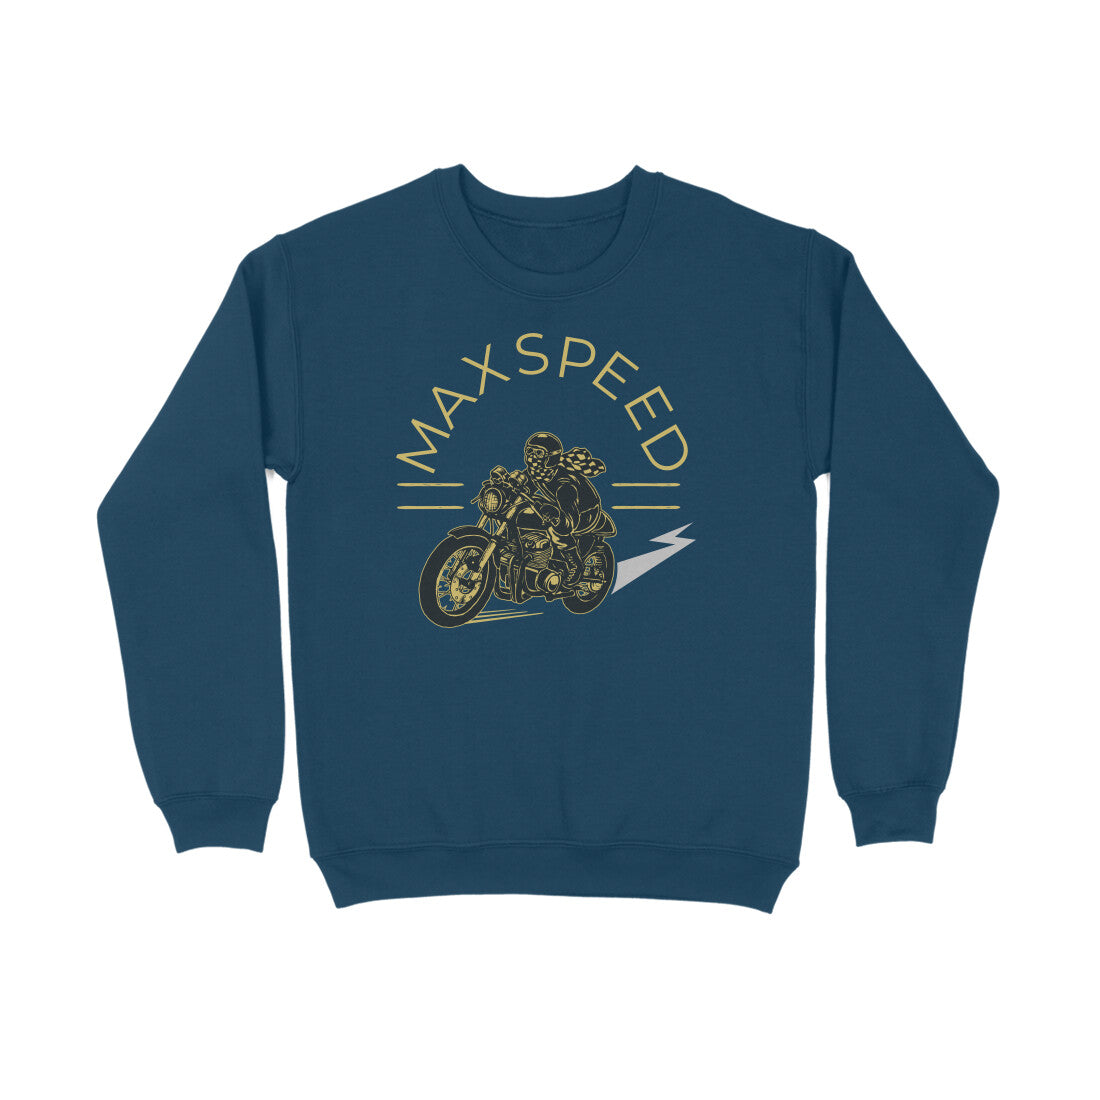 Bilkool Maxspeed Cotton Sweatshirt